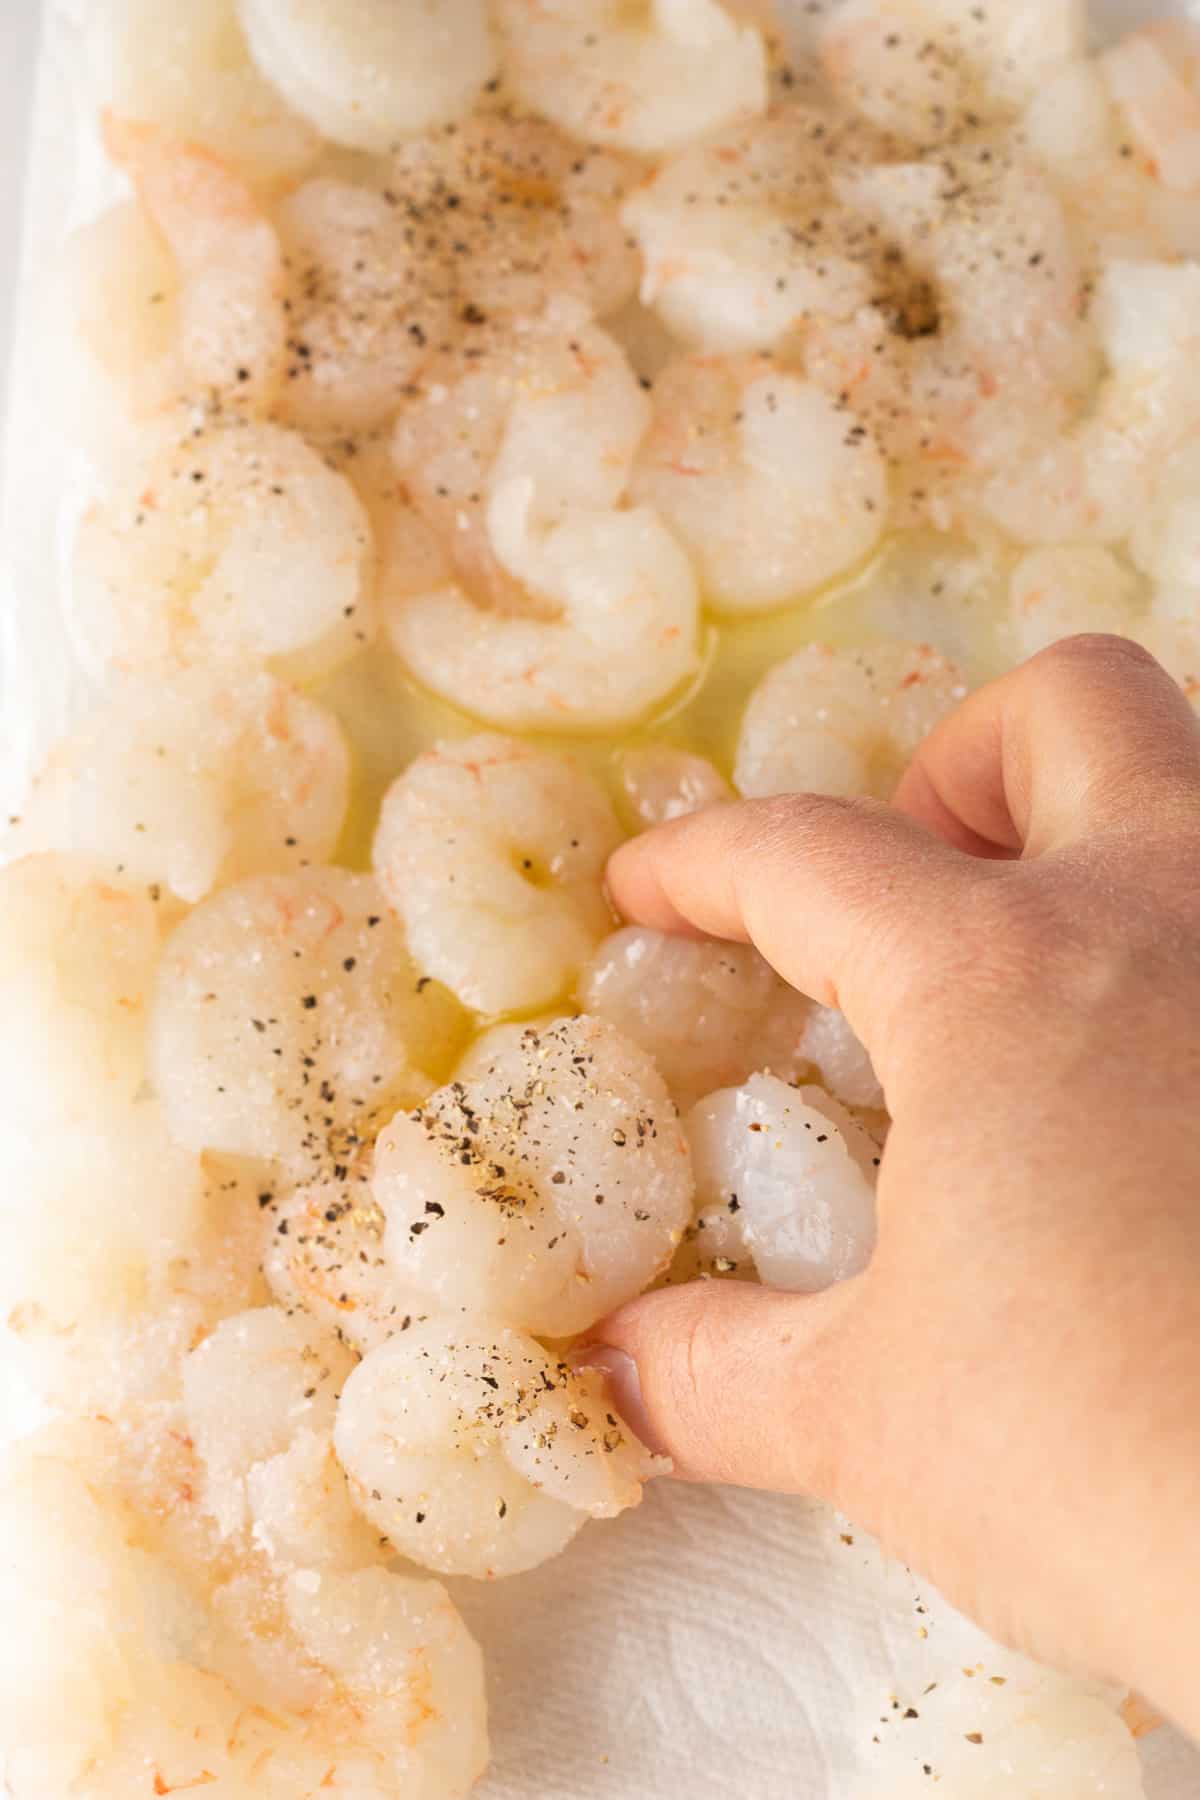 Stirring raw shrimp with a hand.